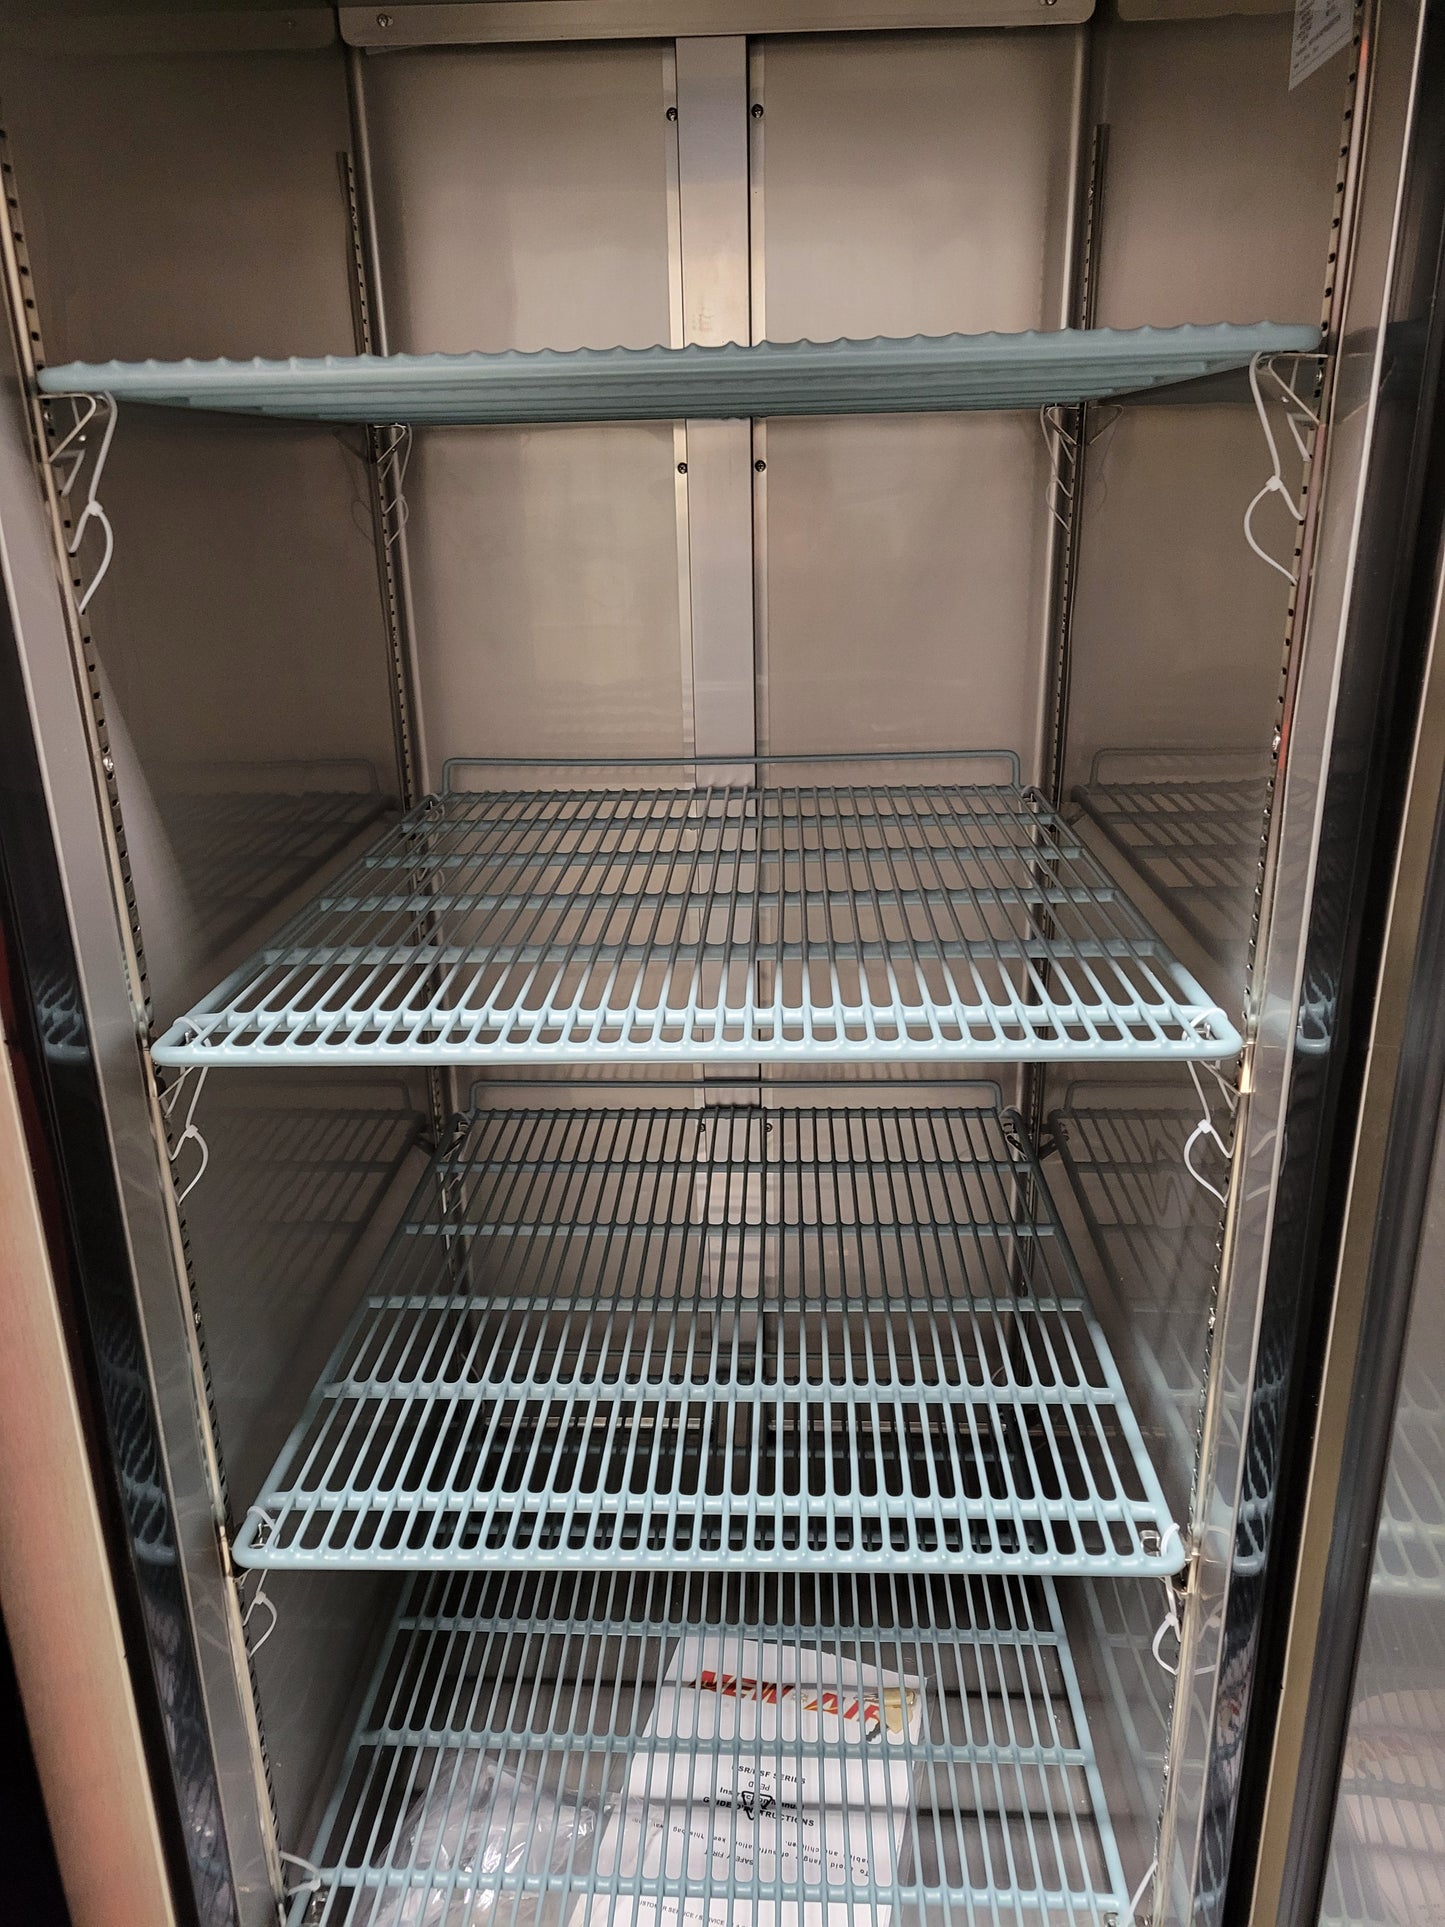 New Air Refrigeration Single Door Freezer